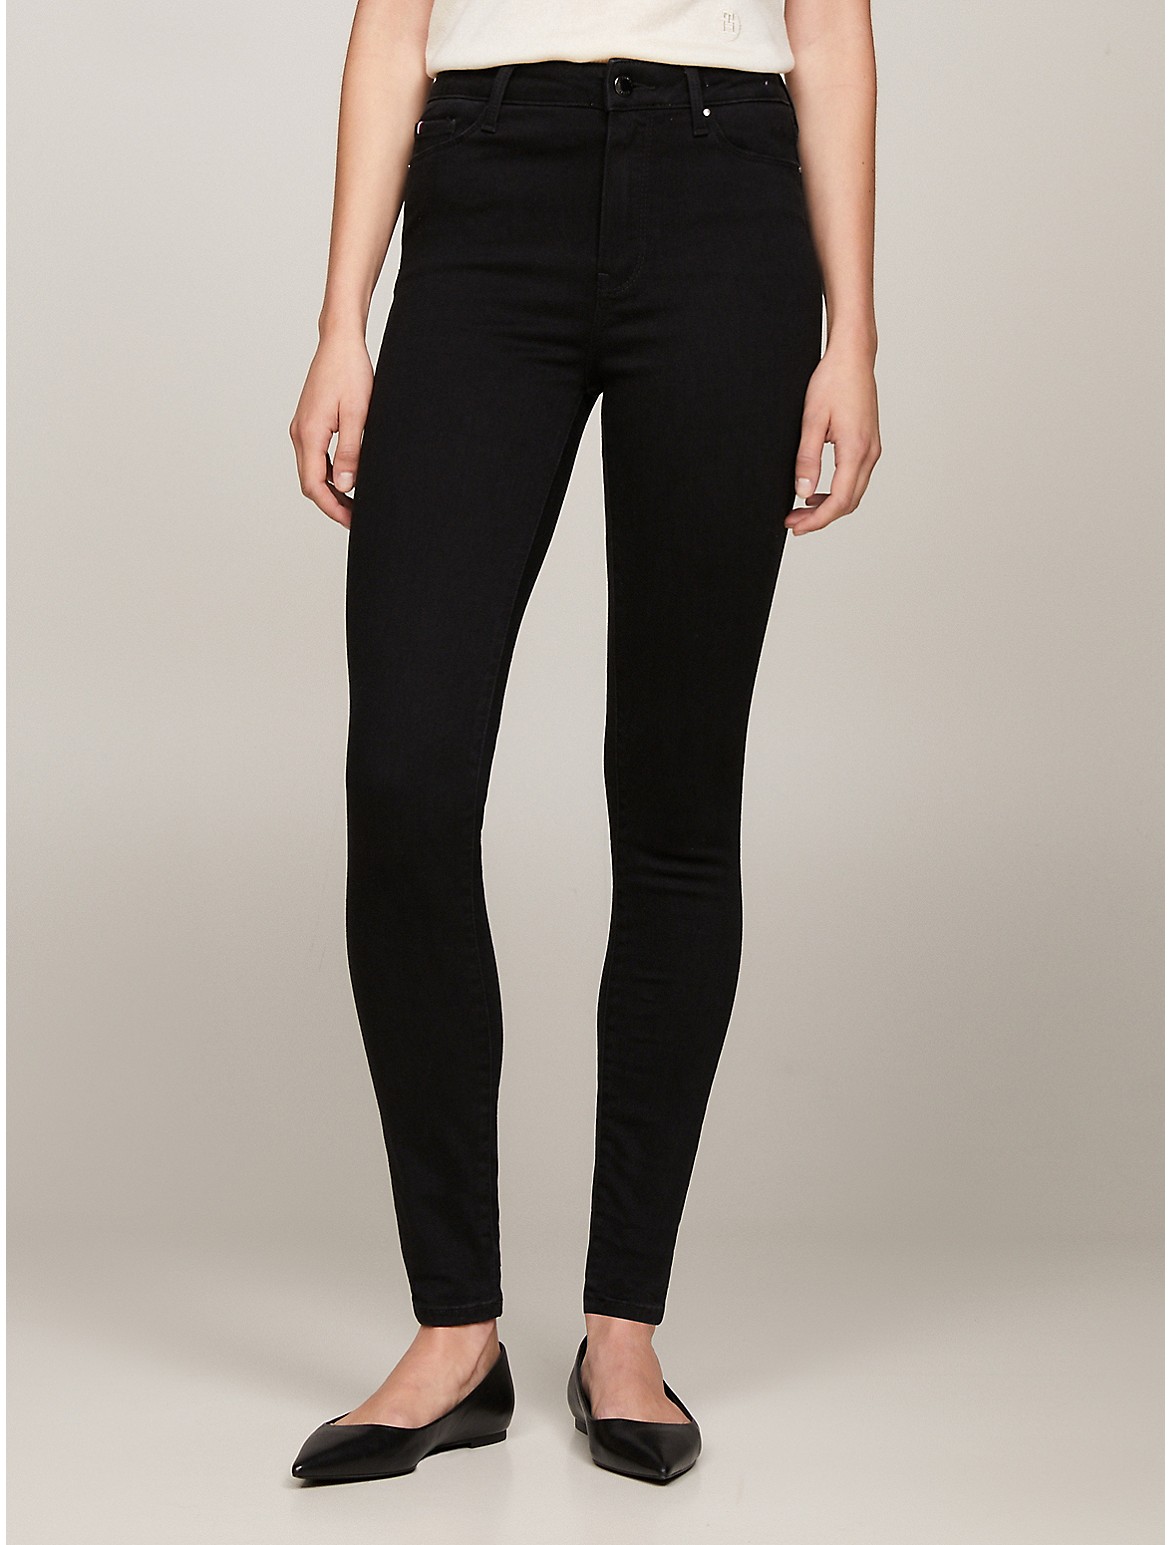 Tommy Hilfiger Women's Ultra High-Rise Skinny Fit Black Jean